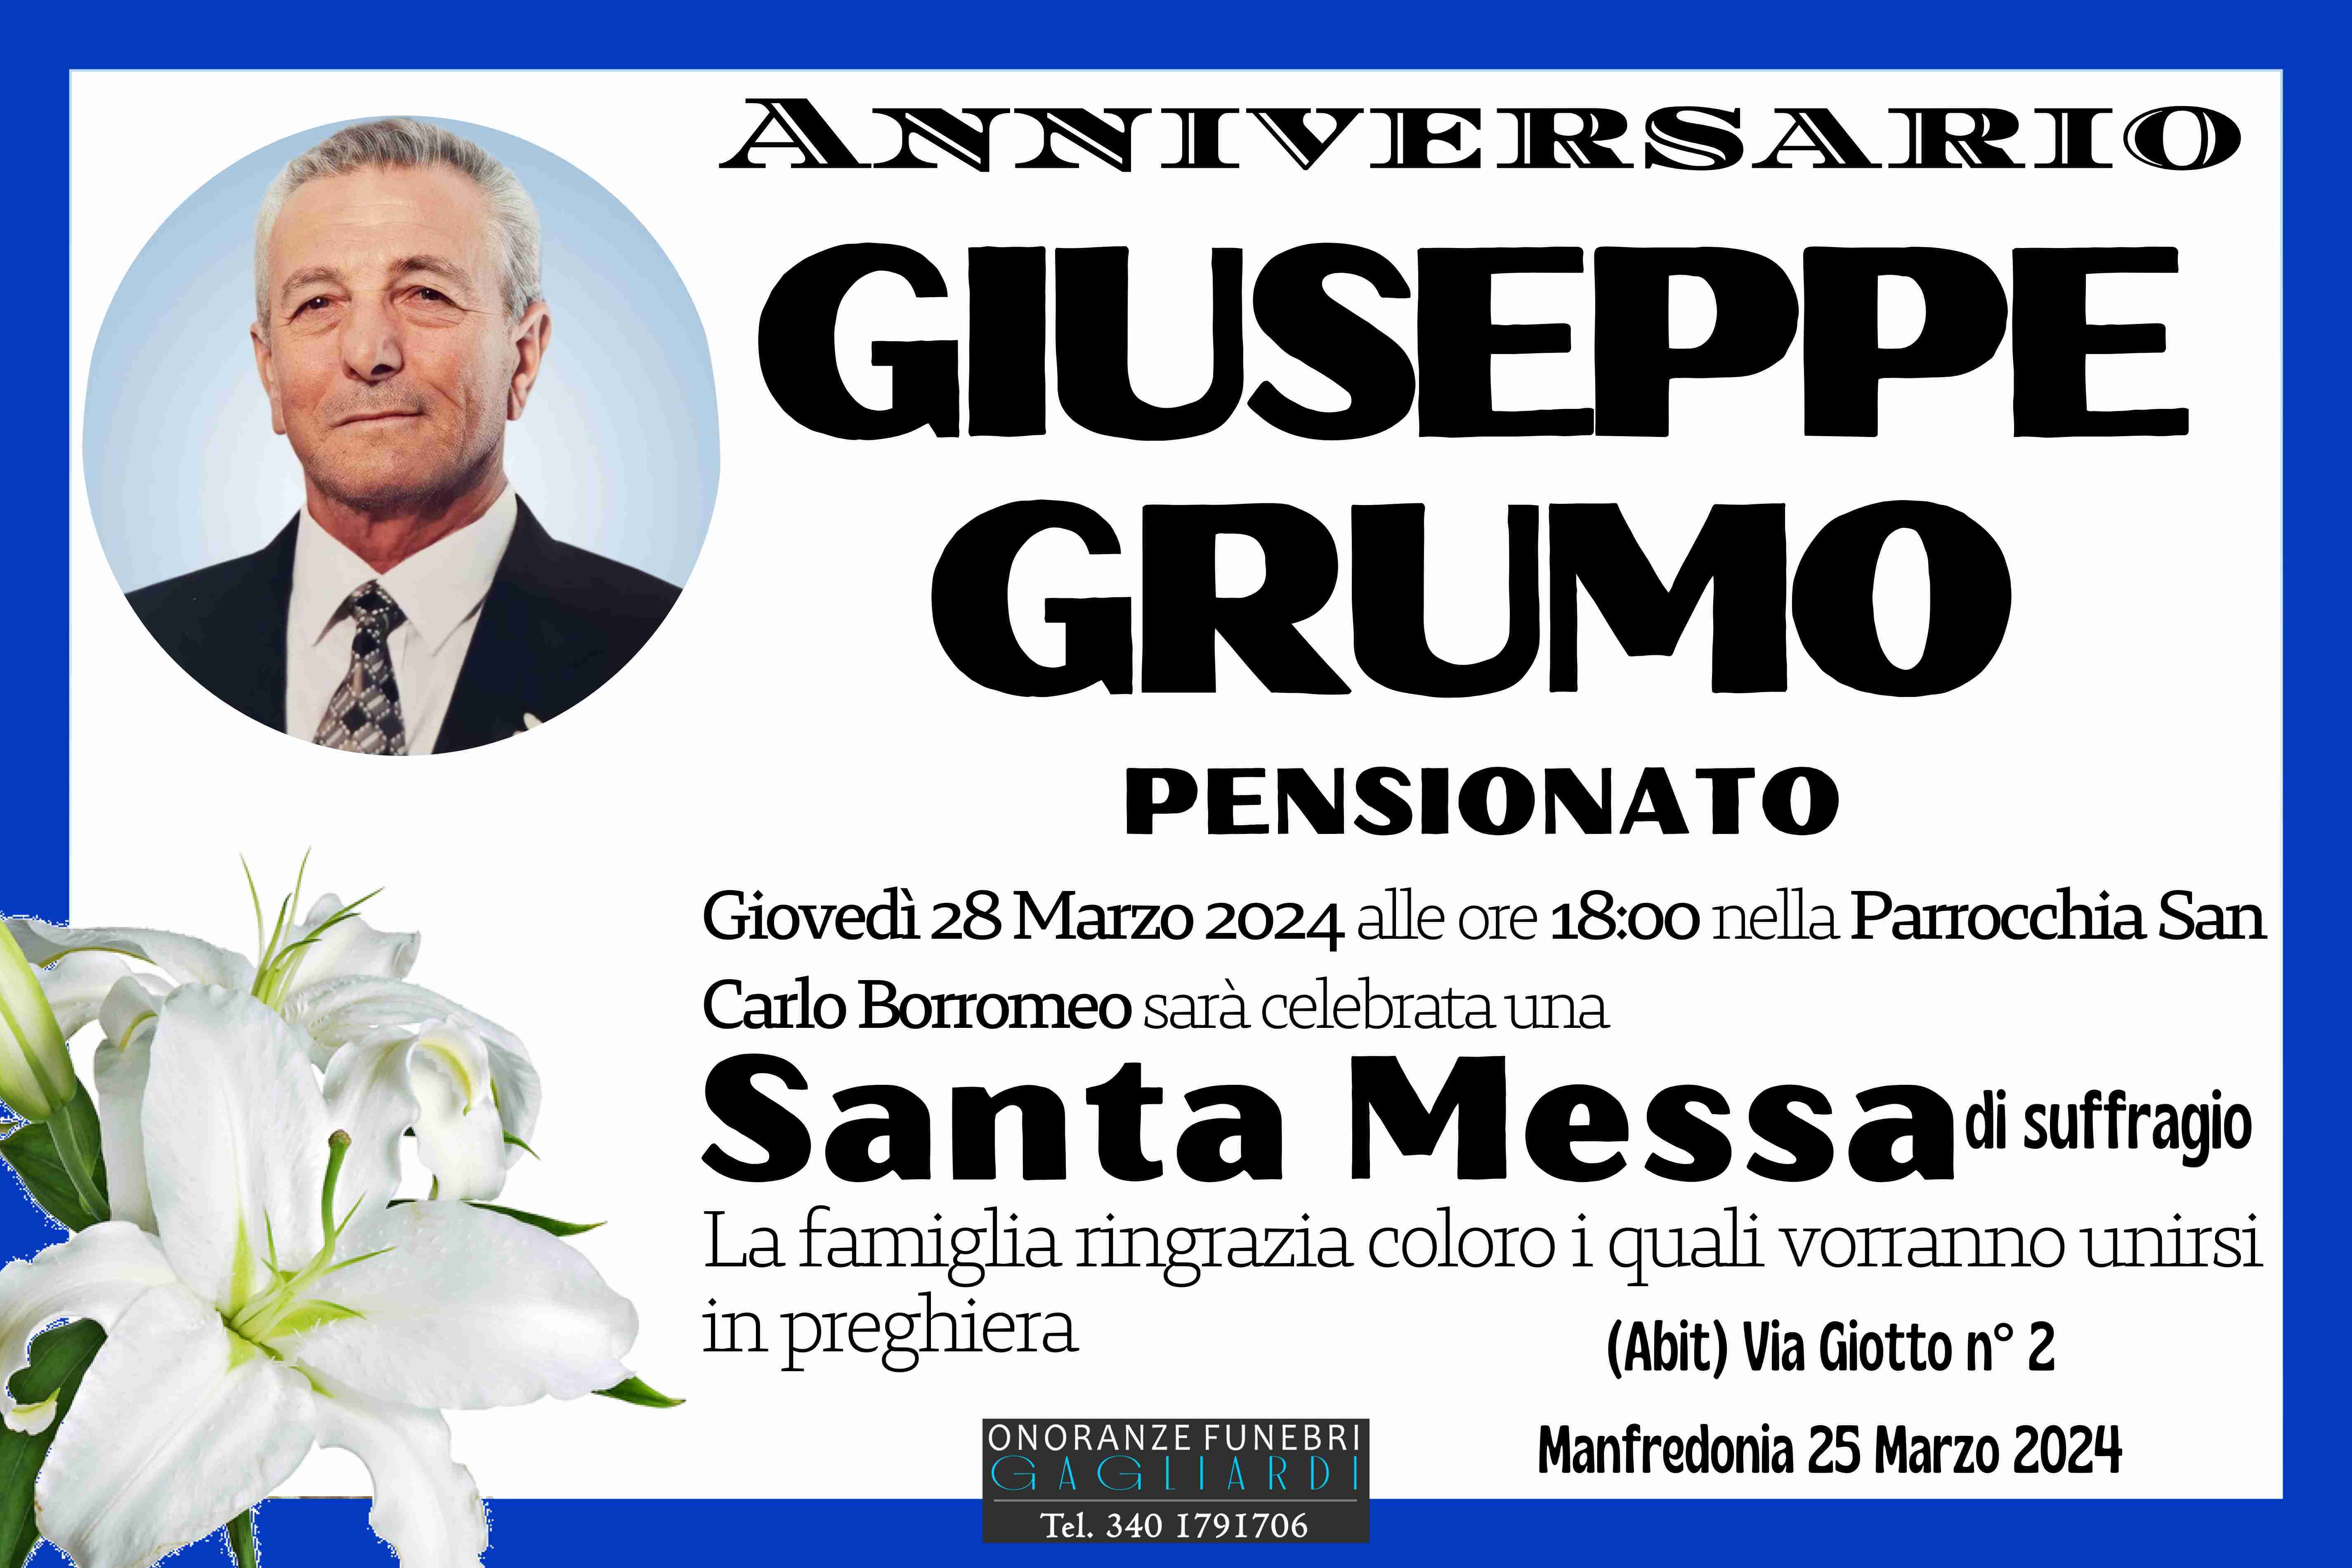 Giuseppe Grumo